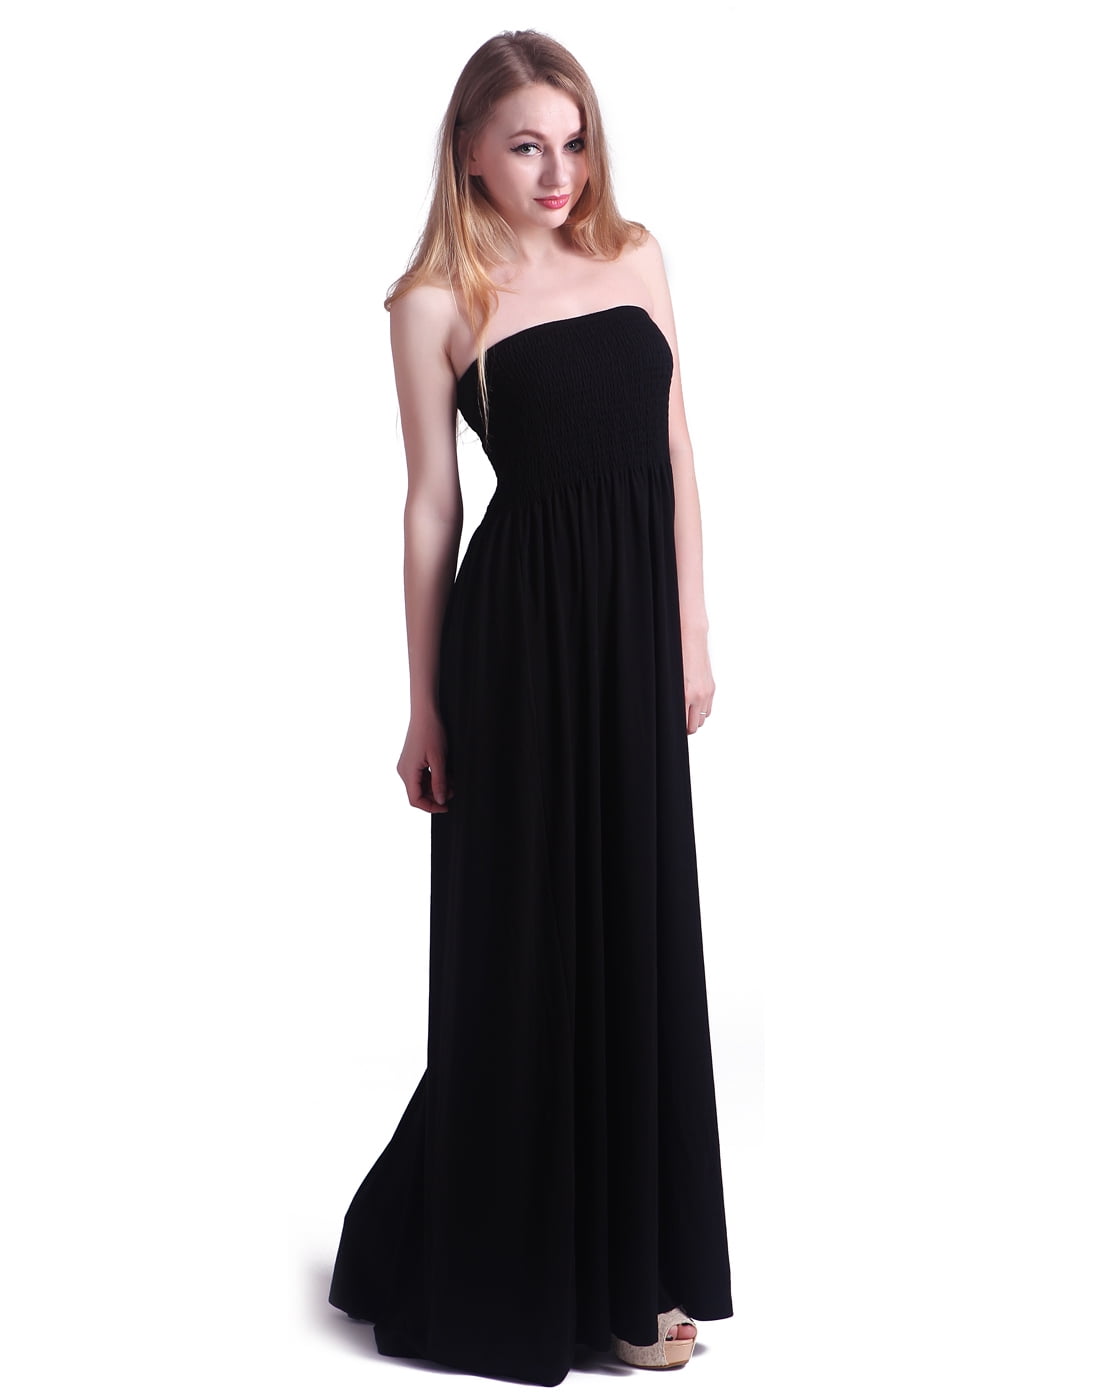 Black strapless diamante maxi tube dress - HEIRESS BEVERLY HILLS | Tube  dress, Mermaid evening dresses, Black dresses classy